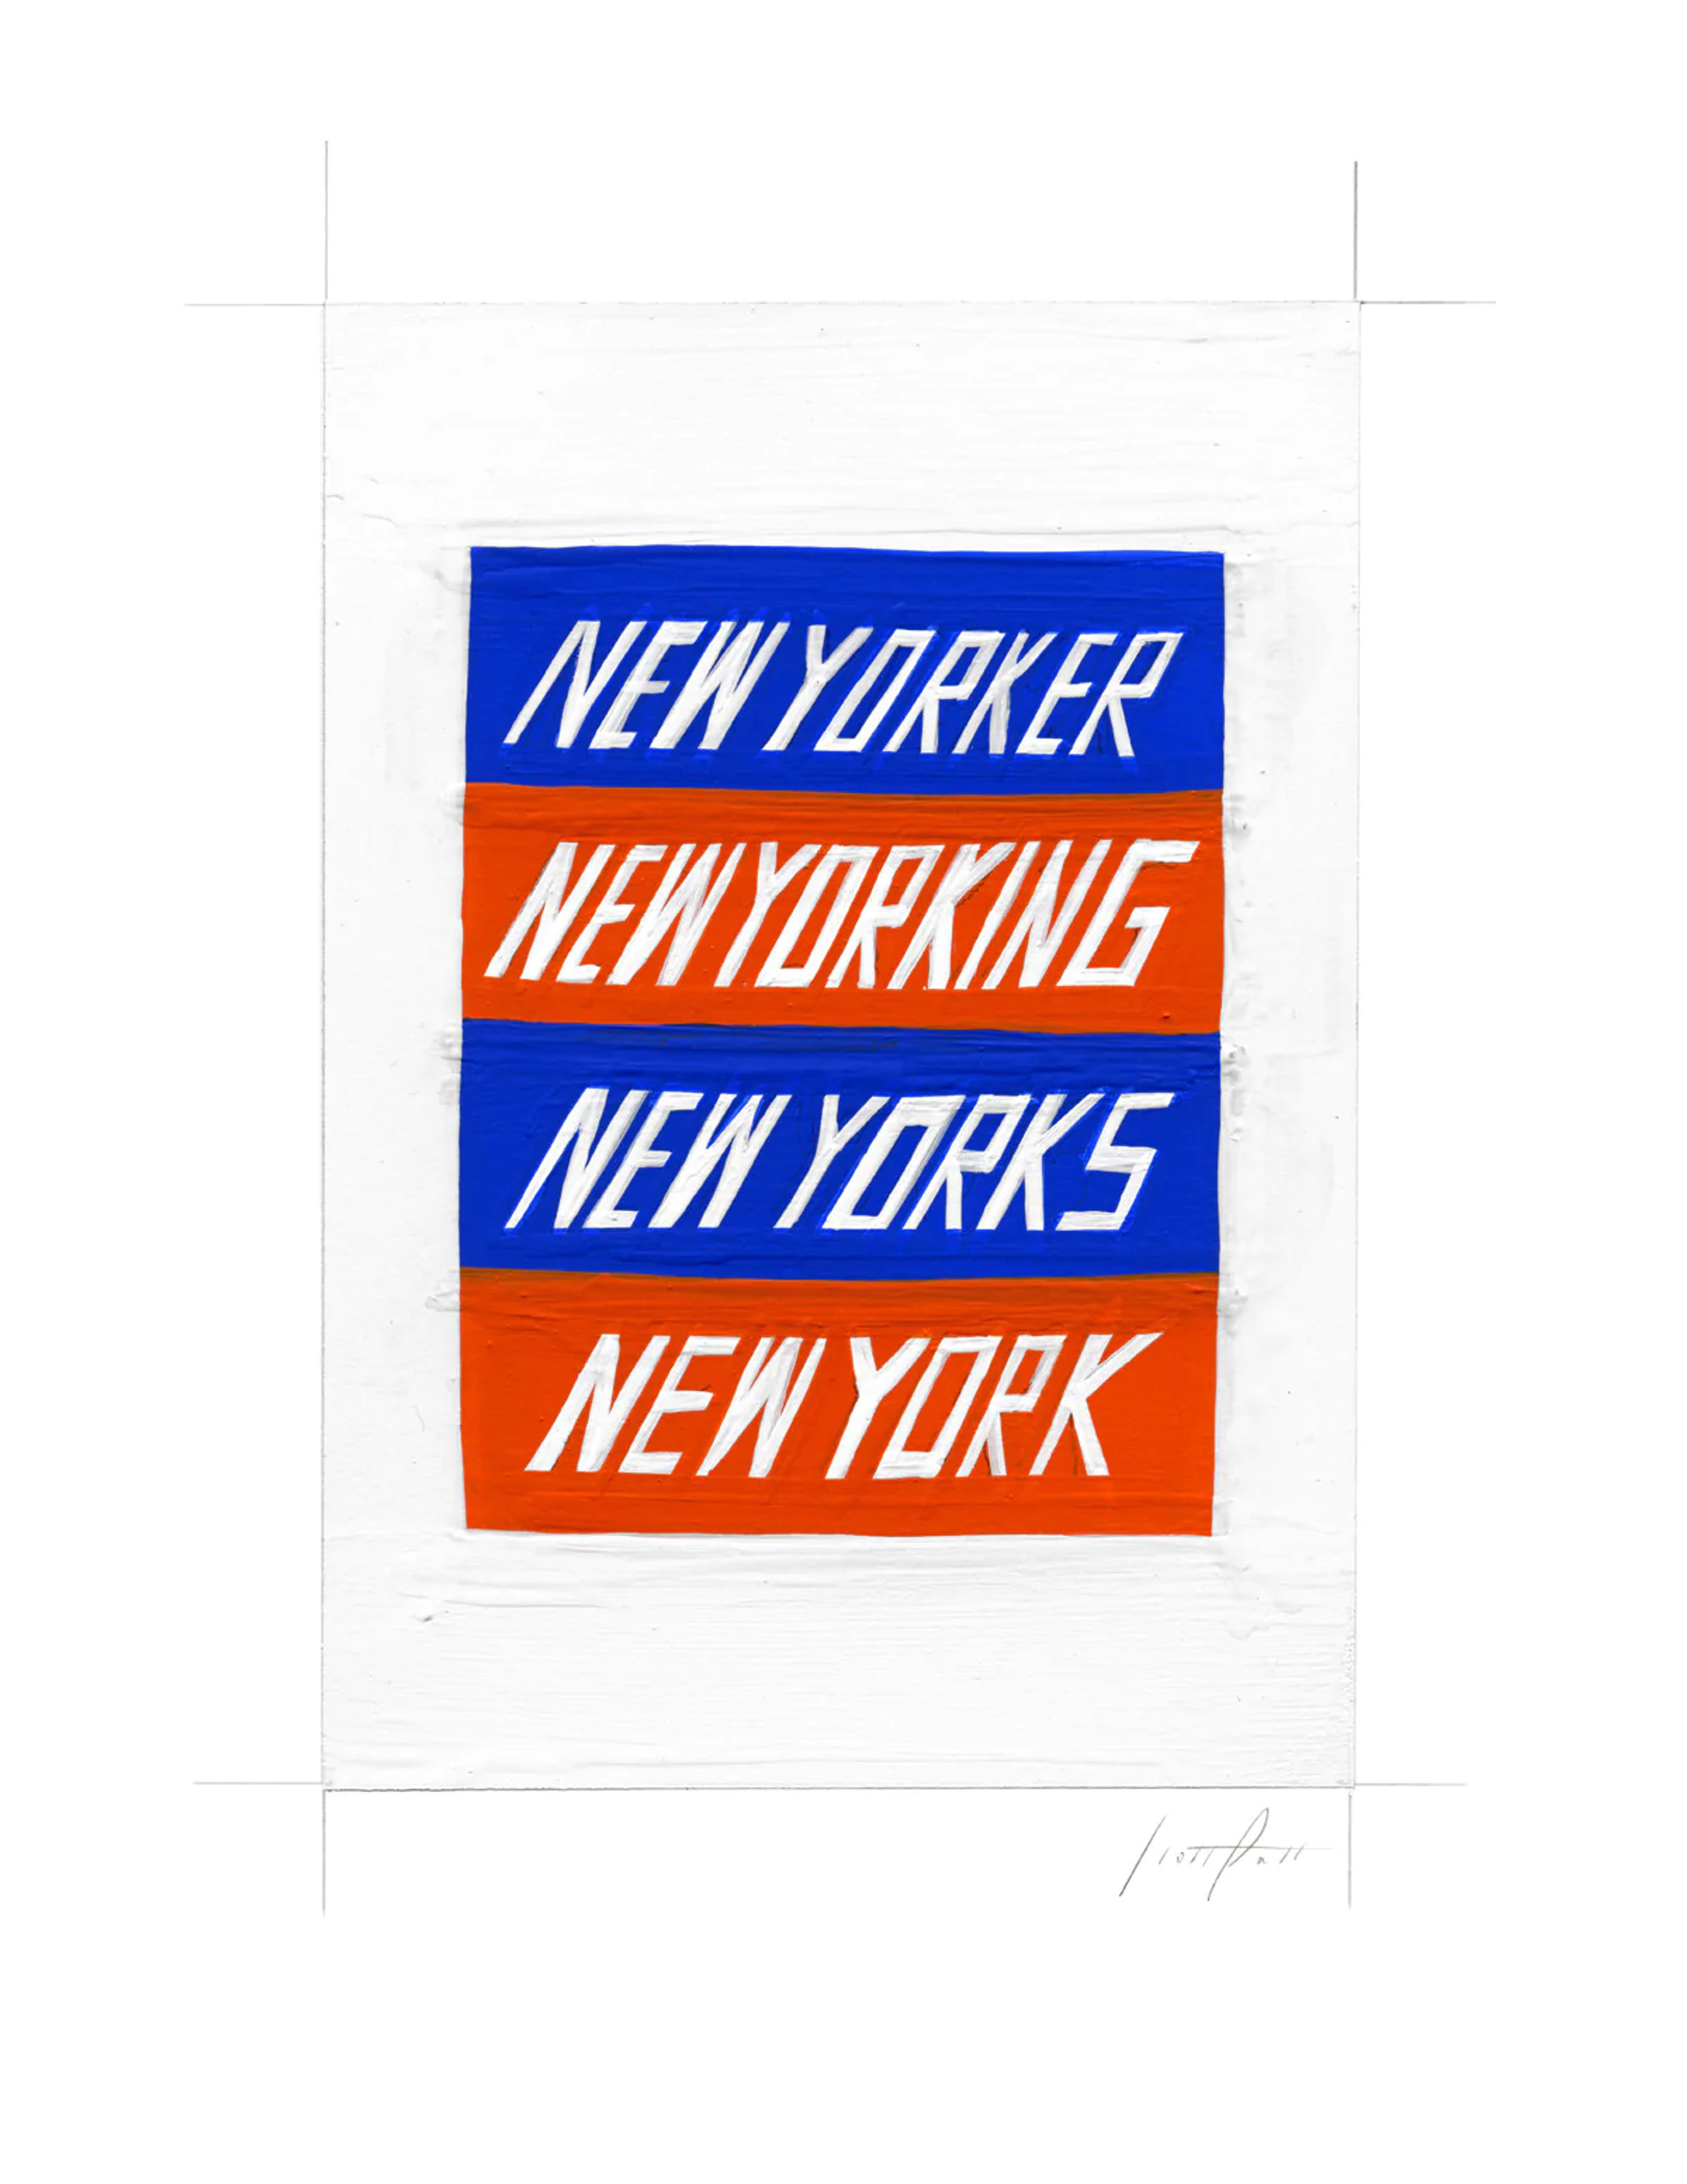 #255 NEW YORKING (BLUE AND ORANGE) - NEW YORKING (BLUE AND ORANGE)